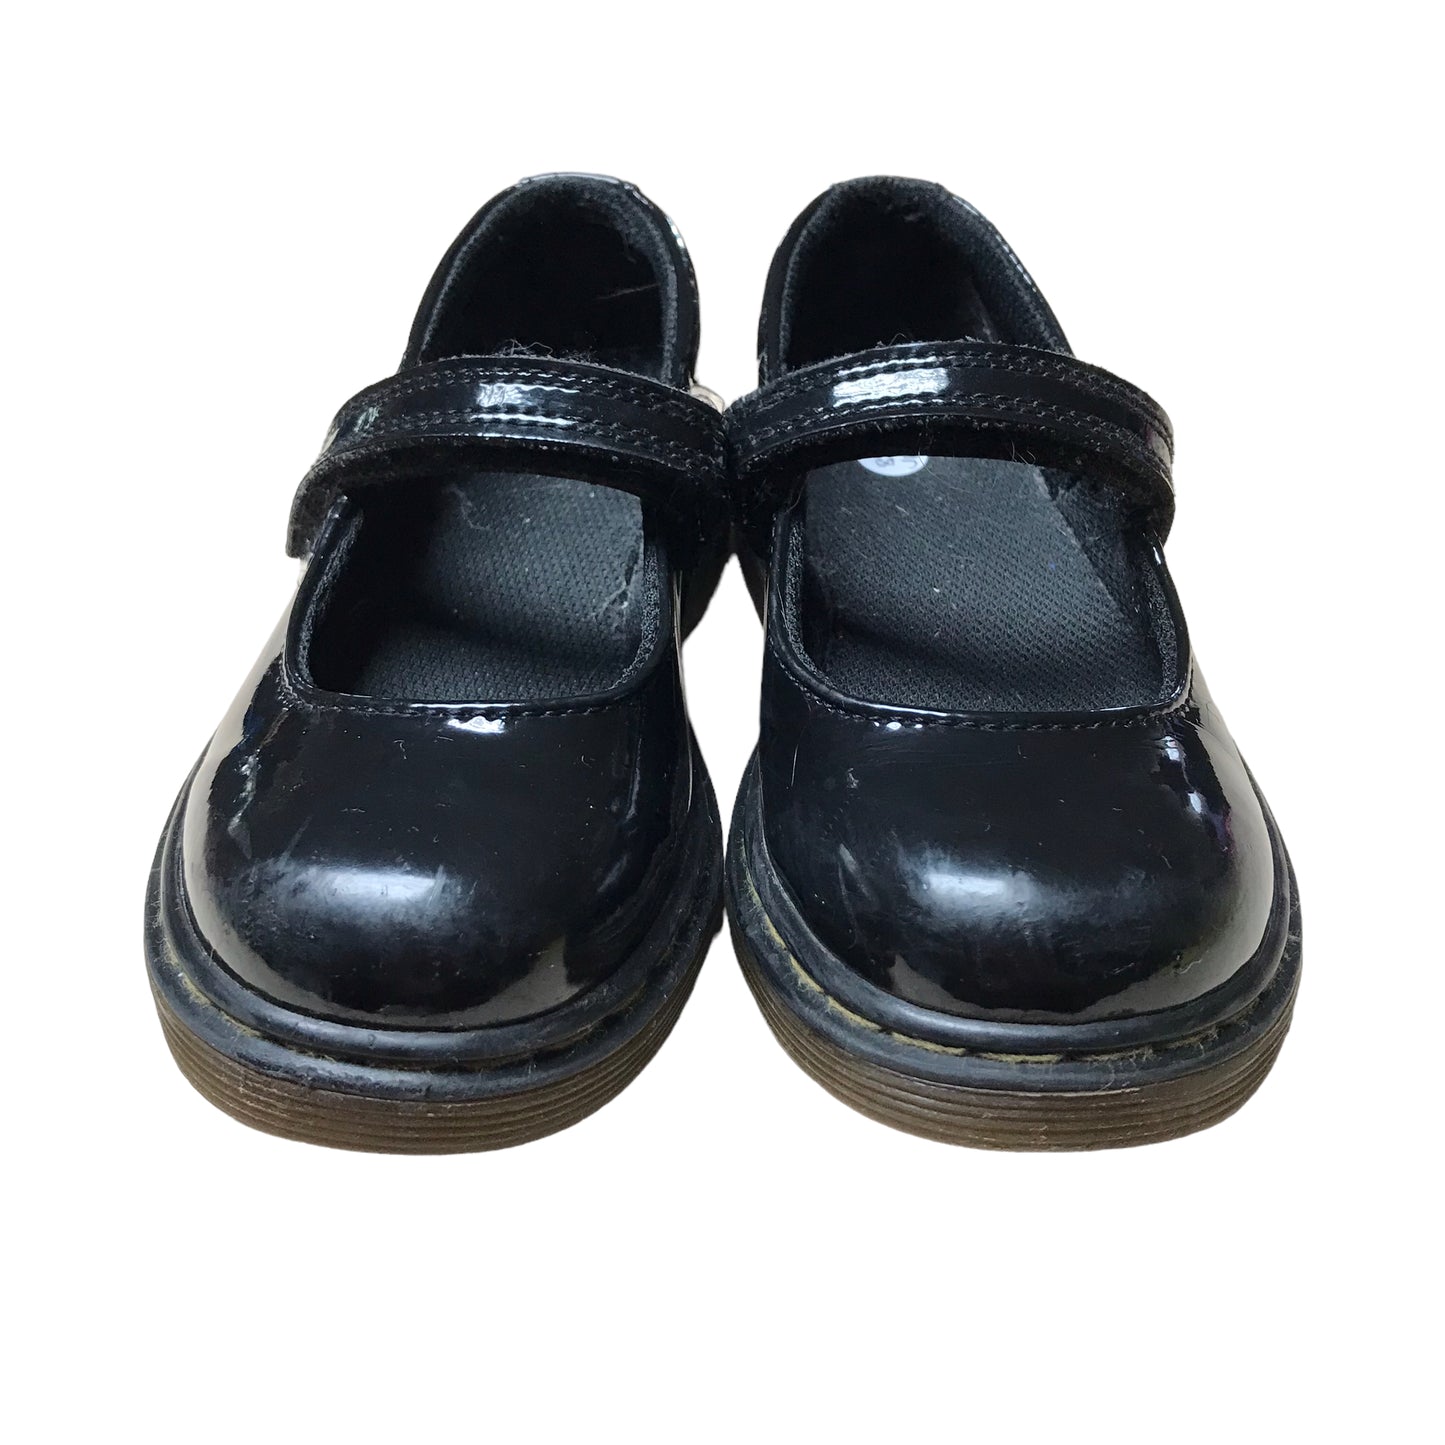 Dr. Martens Black Leather Mary Jane Shoes Shoe Size 8.5 junior